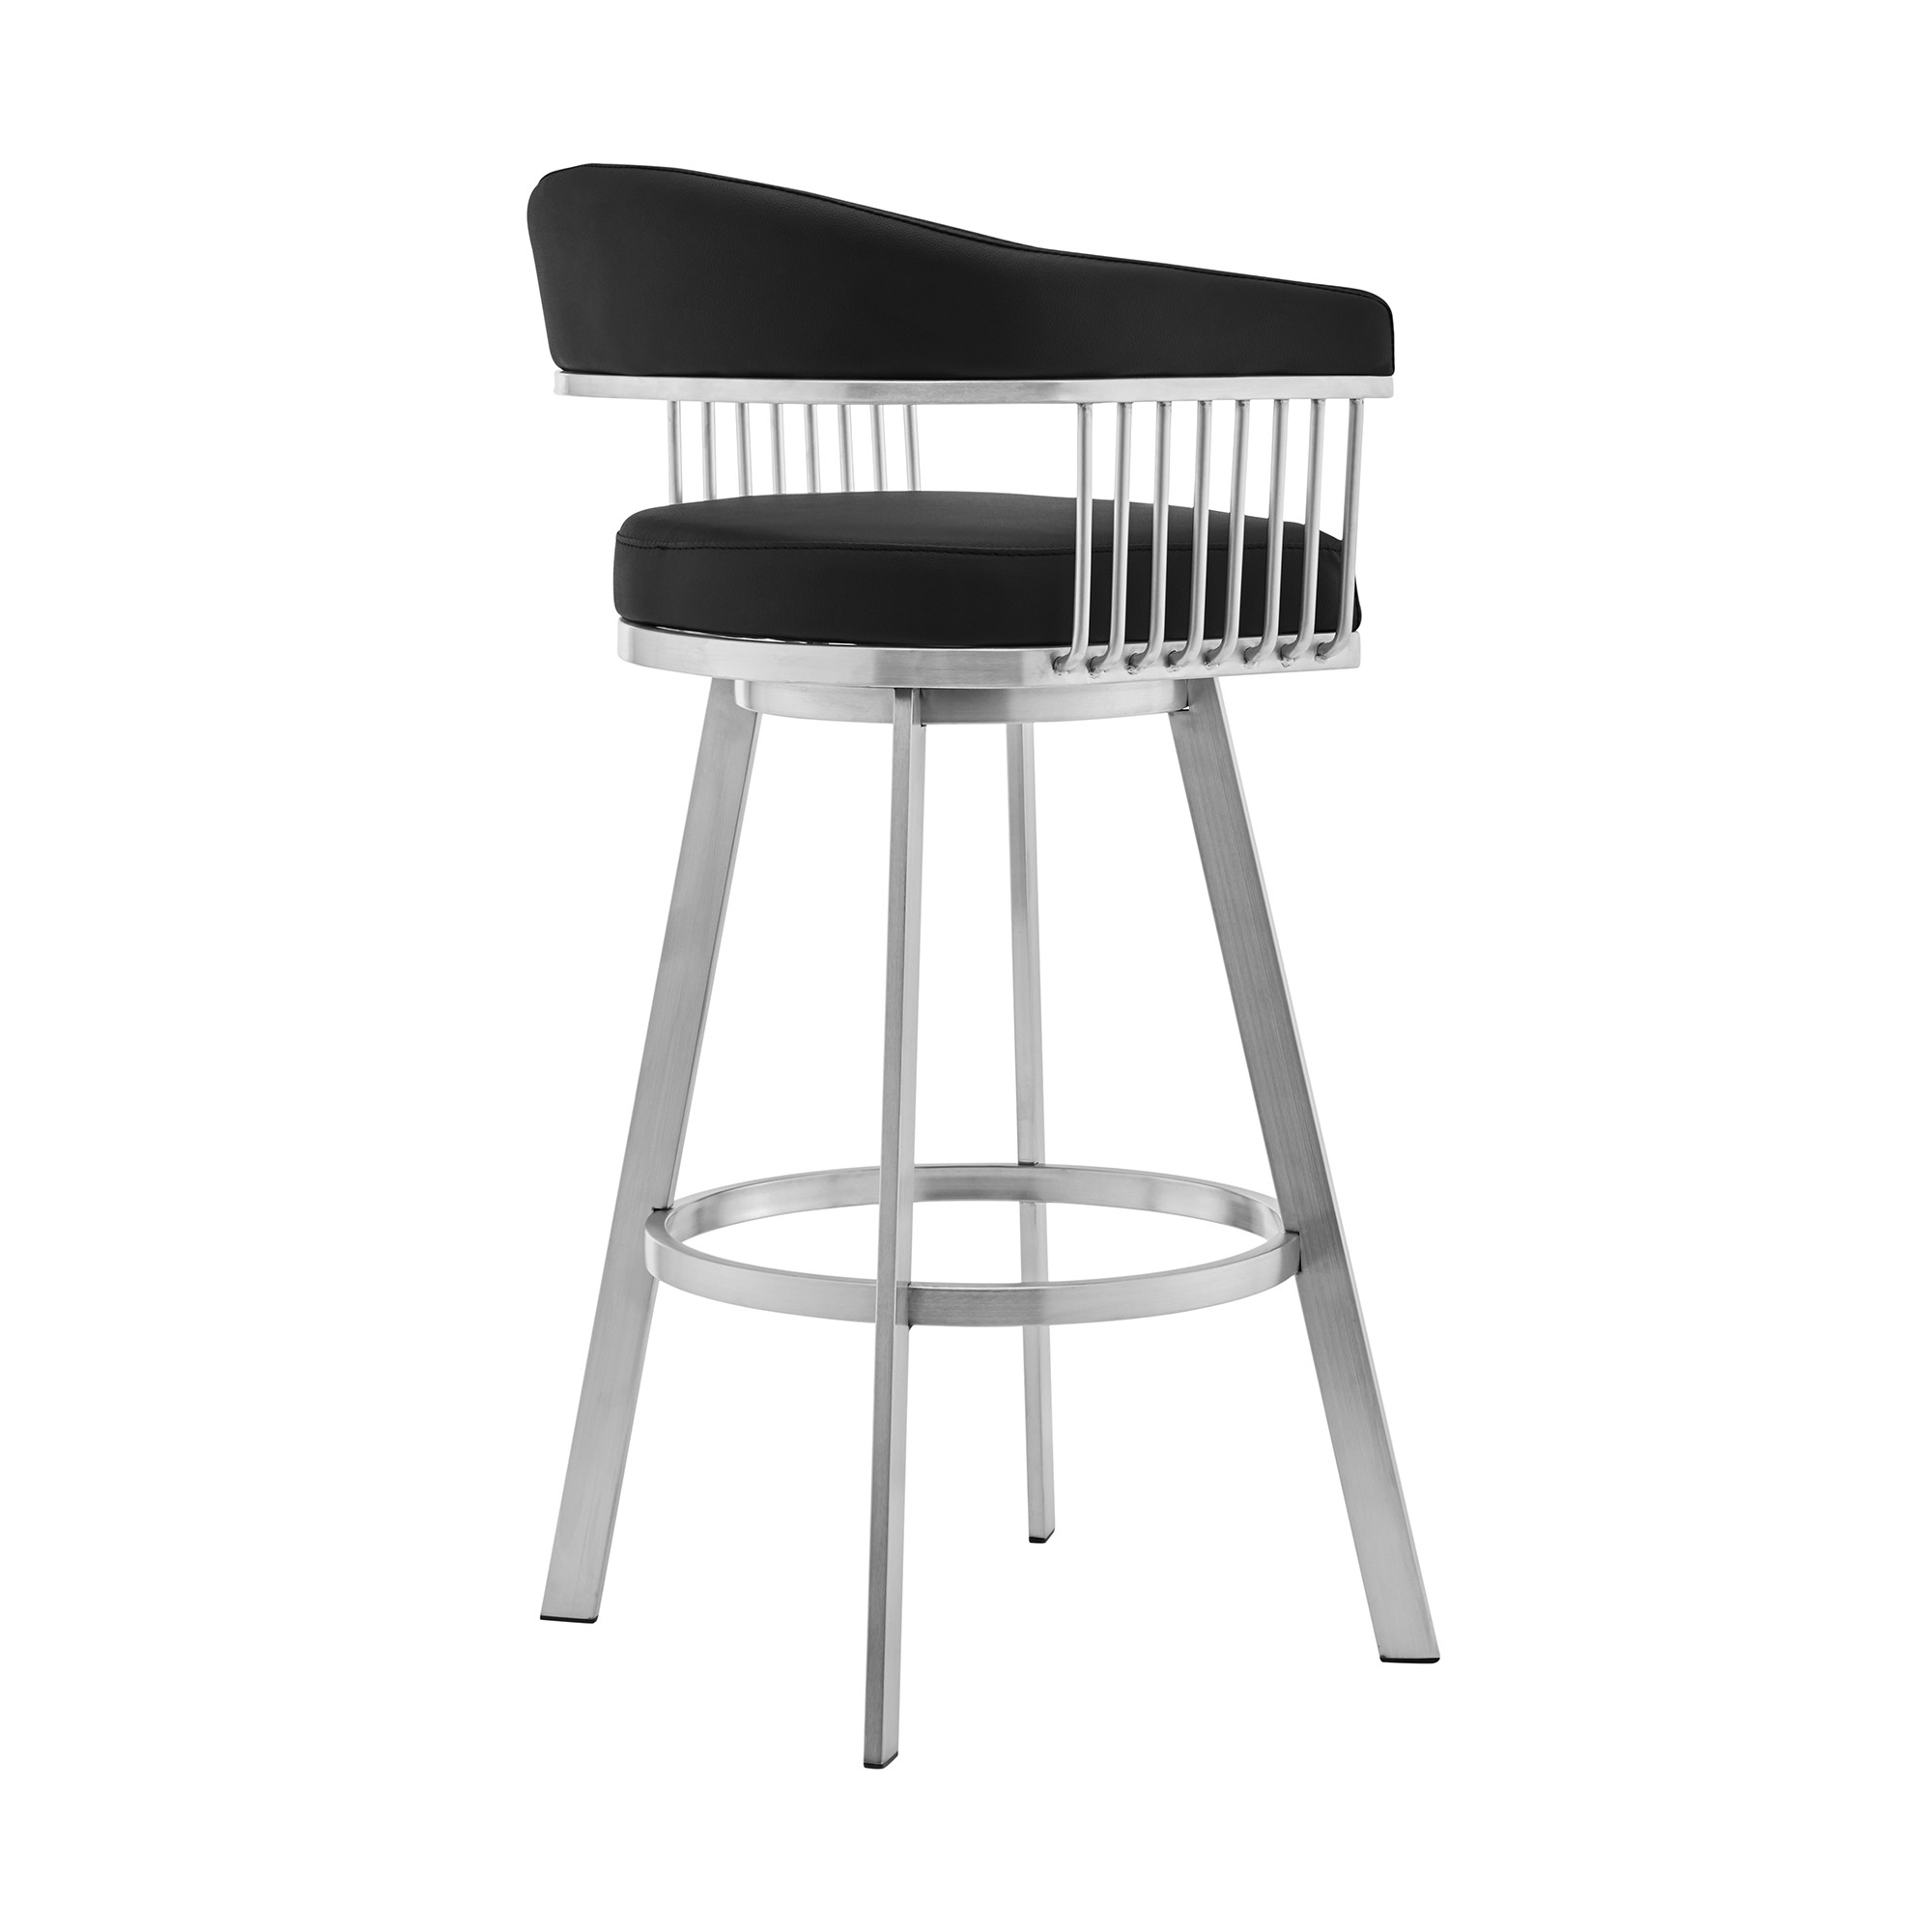 Lif 29 Inch Swivel Barstool Chair, Slatted Arms, Steel, Black Faux Leather- Saltoro Sherpi